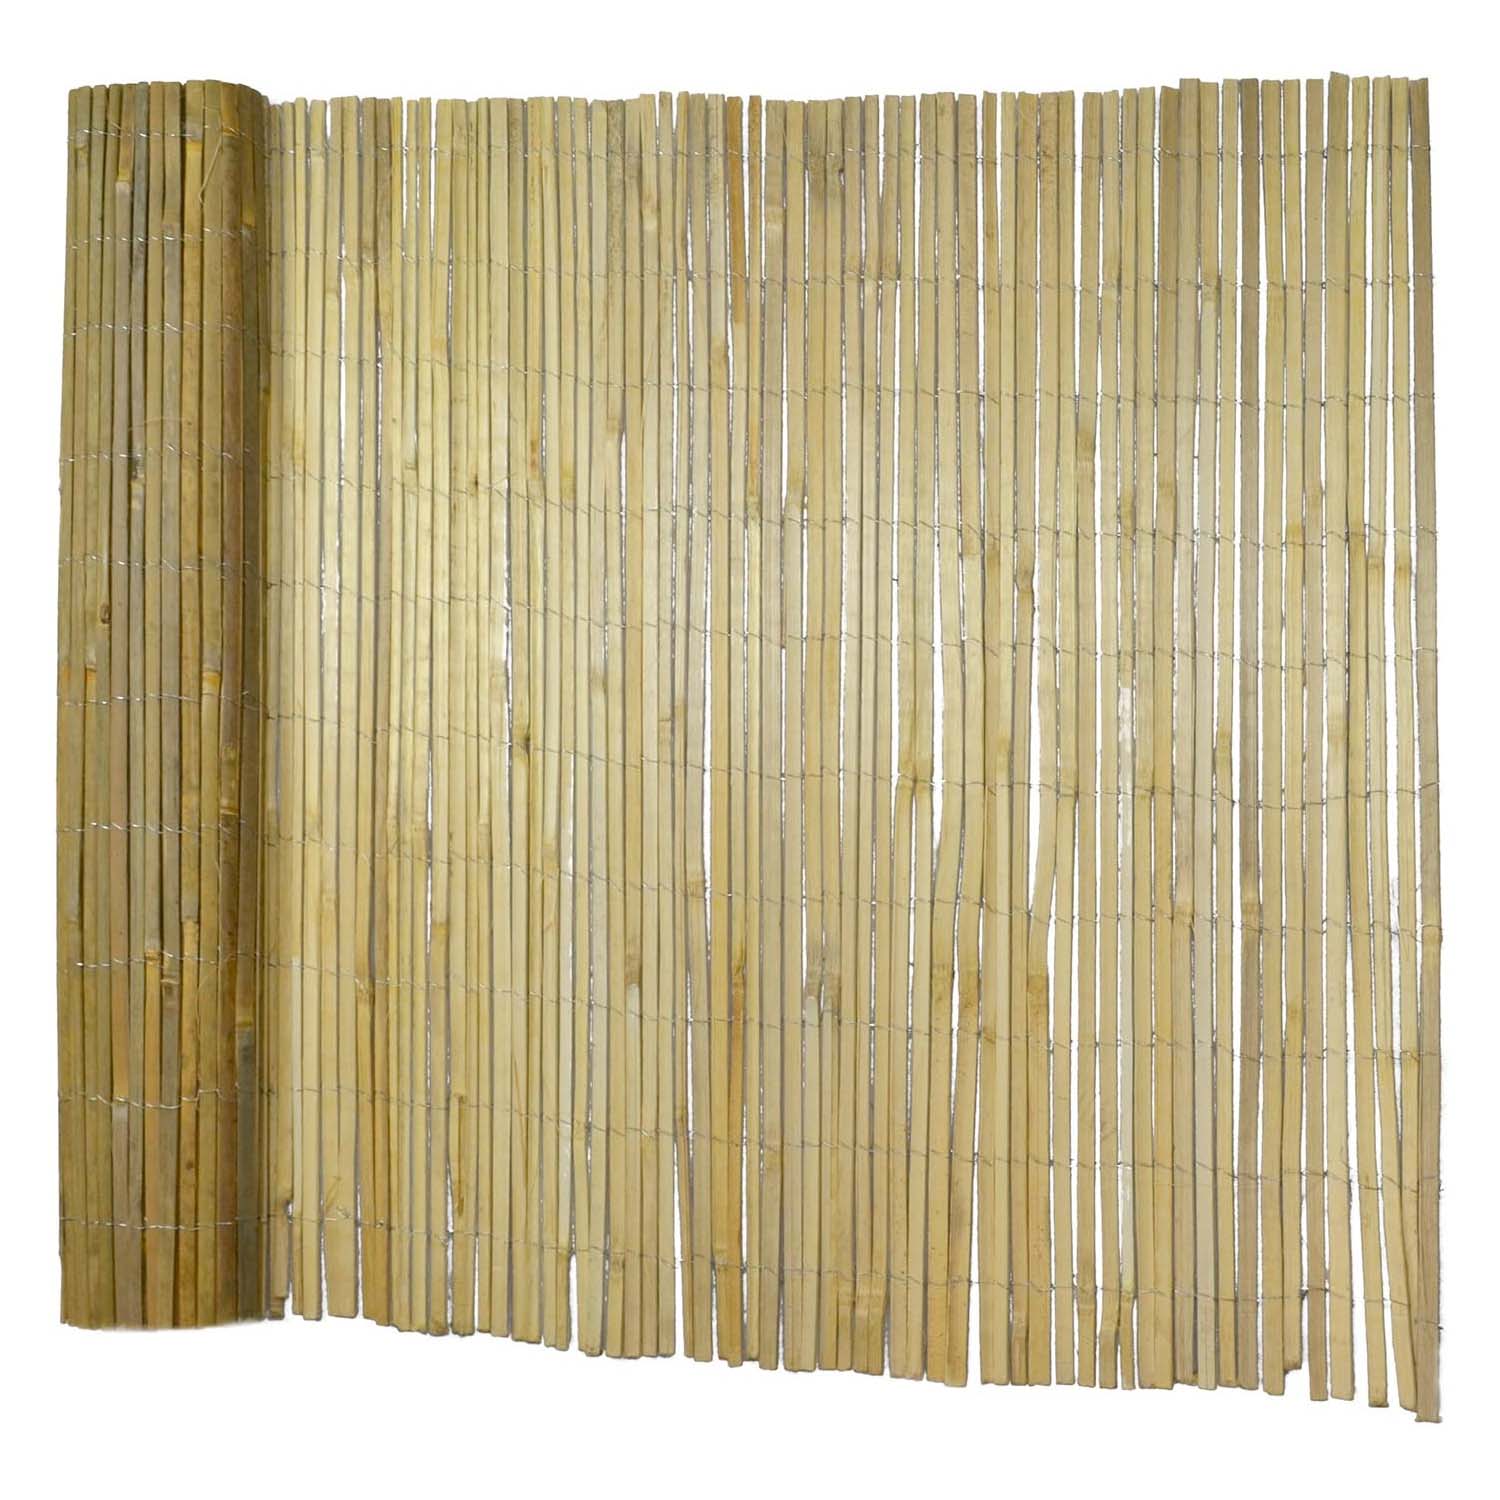 Slim Bamboo - Biombo Bambú Arelle - 150X300Cm